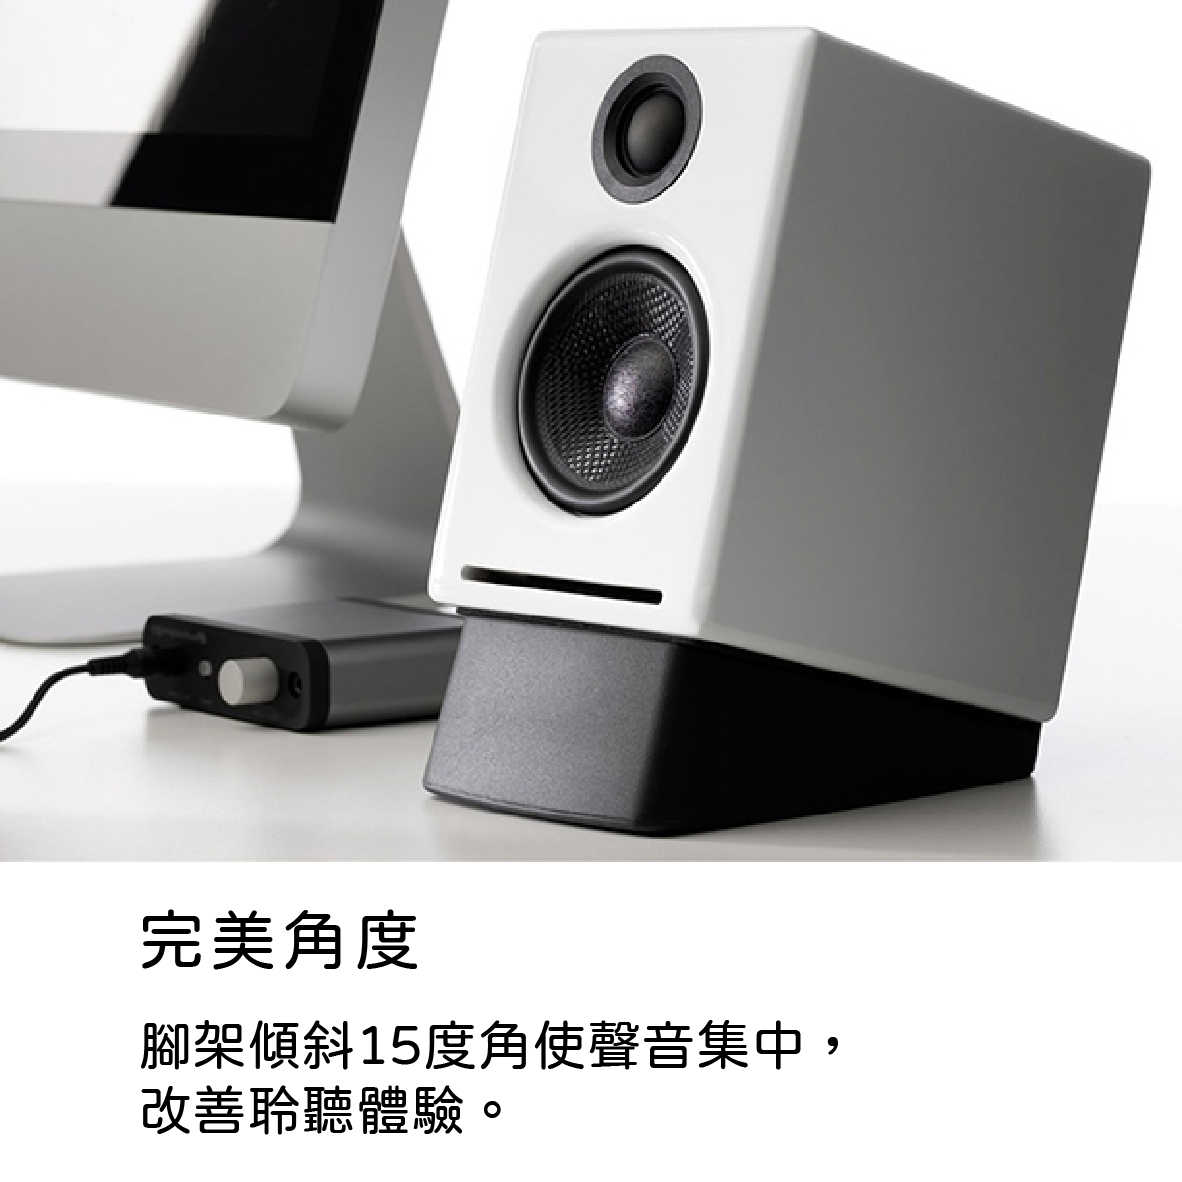 AE 聲擎 Audioengine DS1 小型 音響底座 A1 A2+ HD3 適用 台灣代理 公司貨 | 金曲音響